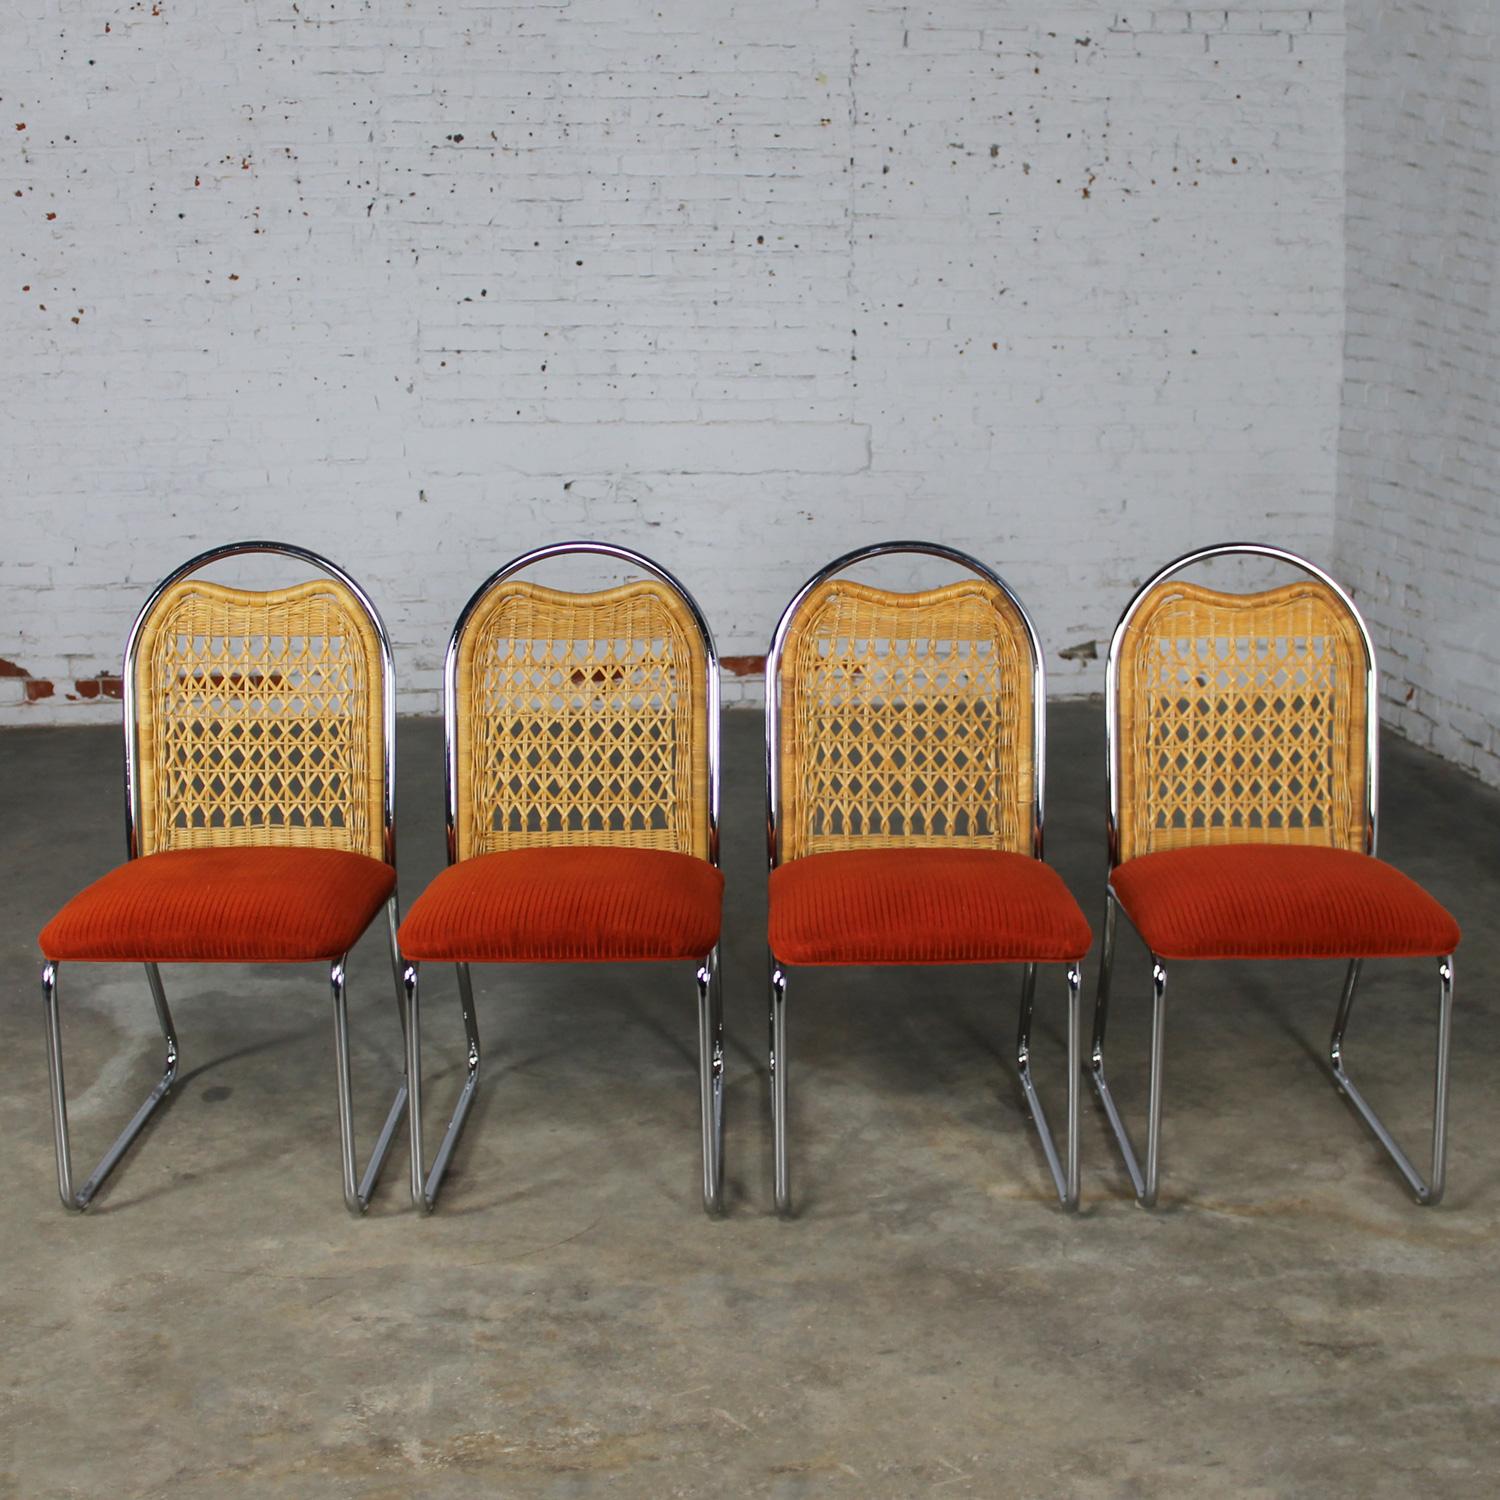 1980’s Modern Daystrom Dining Chairs Chrome Wicker & Orange Fabric Set of 4  13